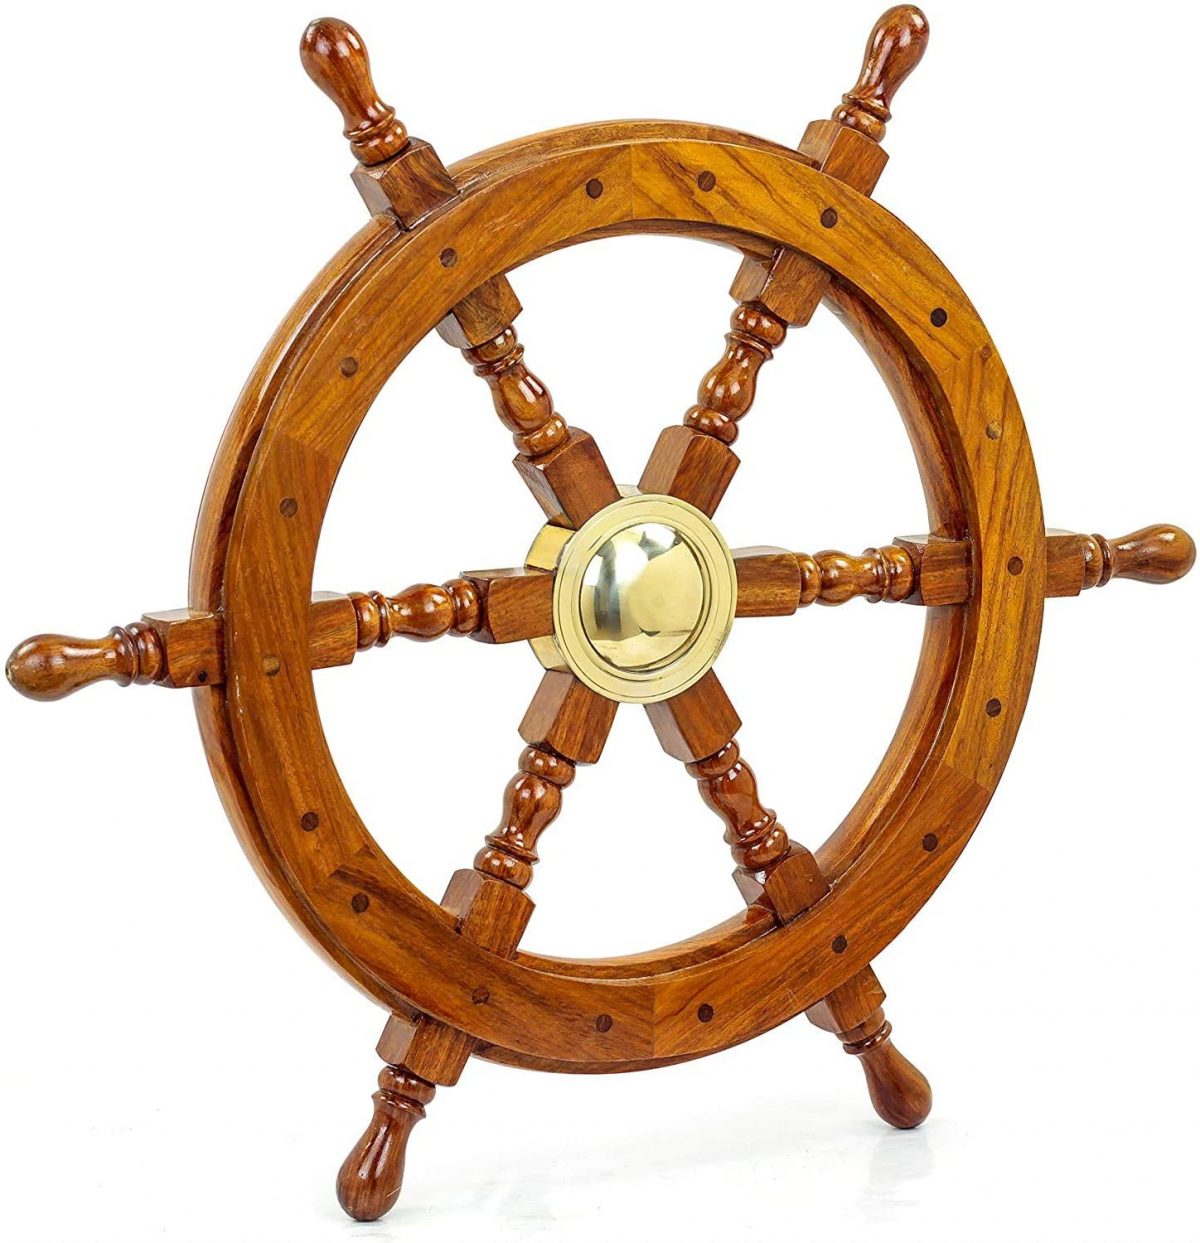 Nagina International Nautical Handcrafted Wooden Ship Wheel - Home Wall Decor | Pirate's Wall Hanging Sculpture & Accessories - Batasa Pendi